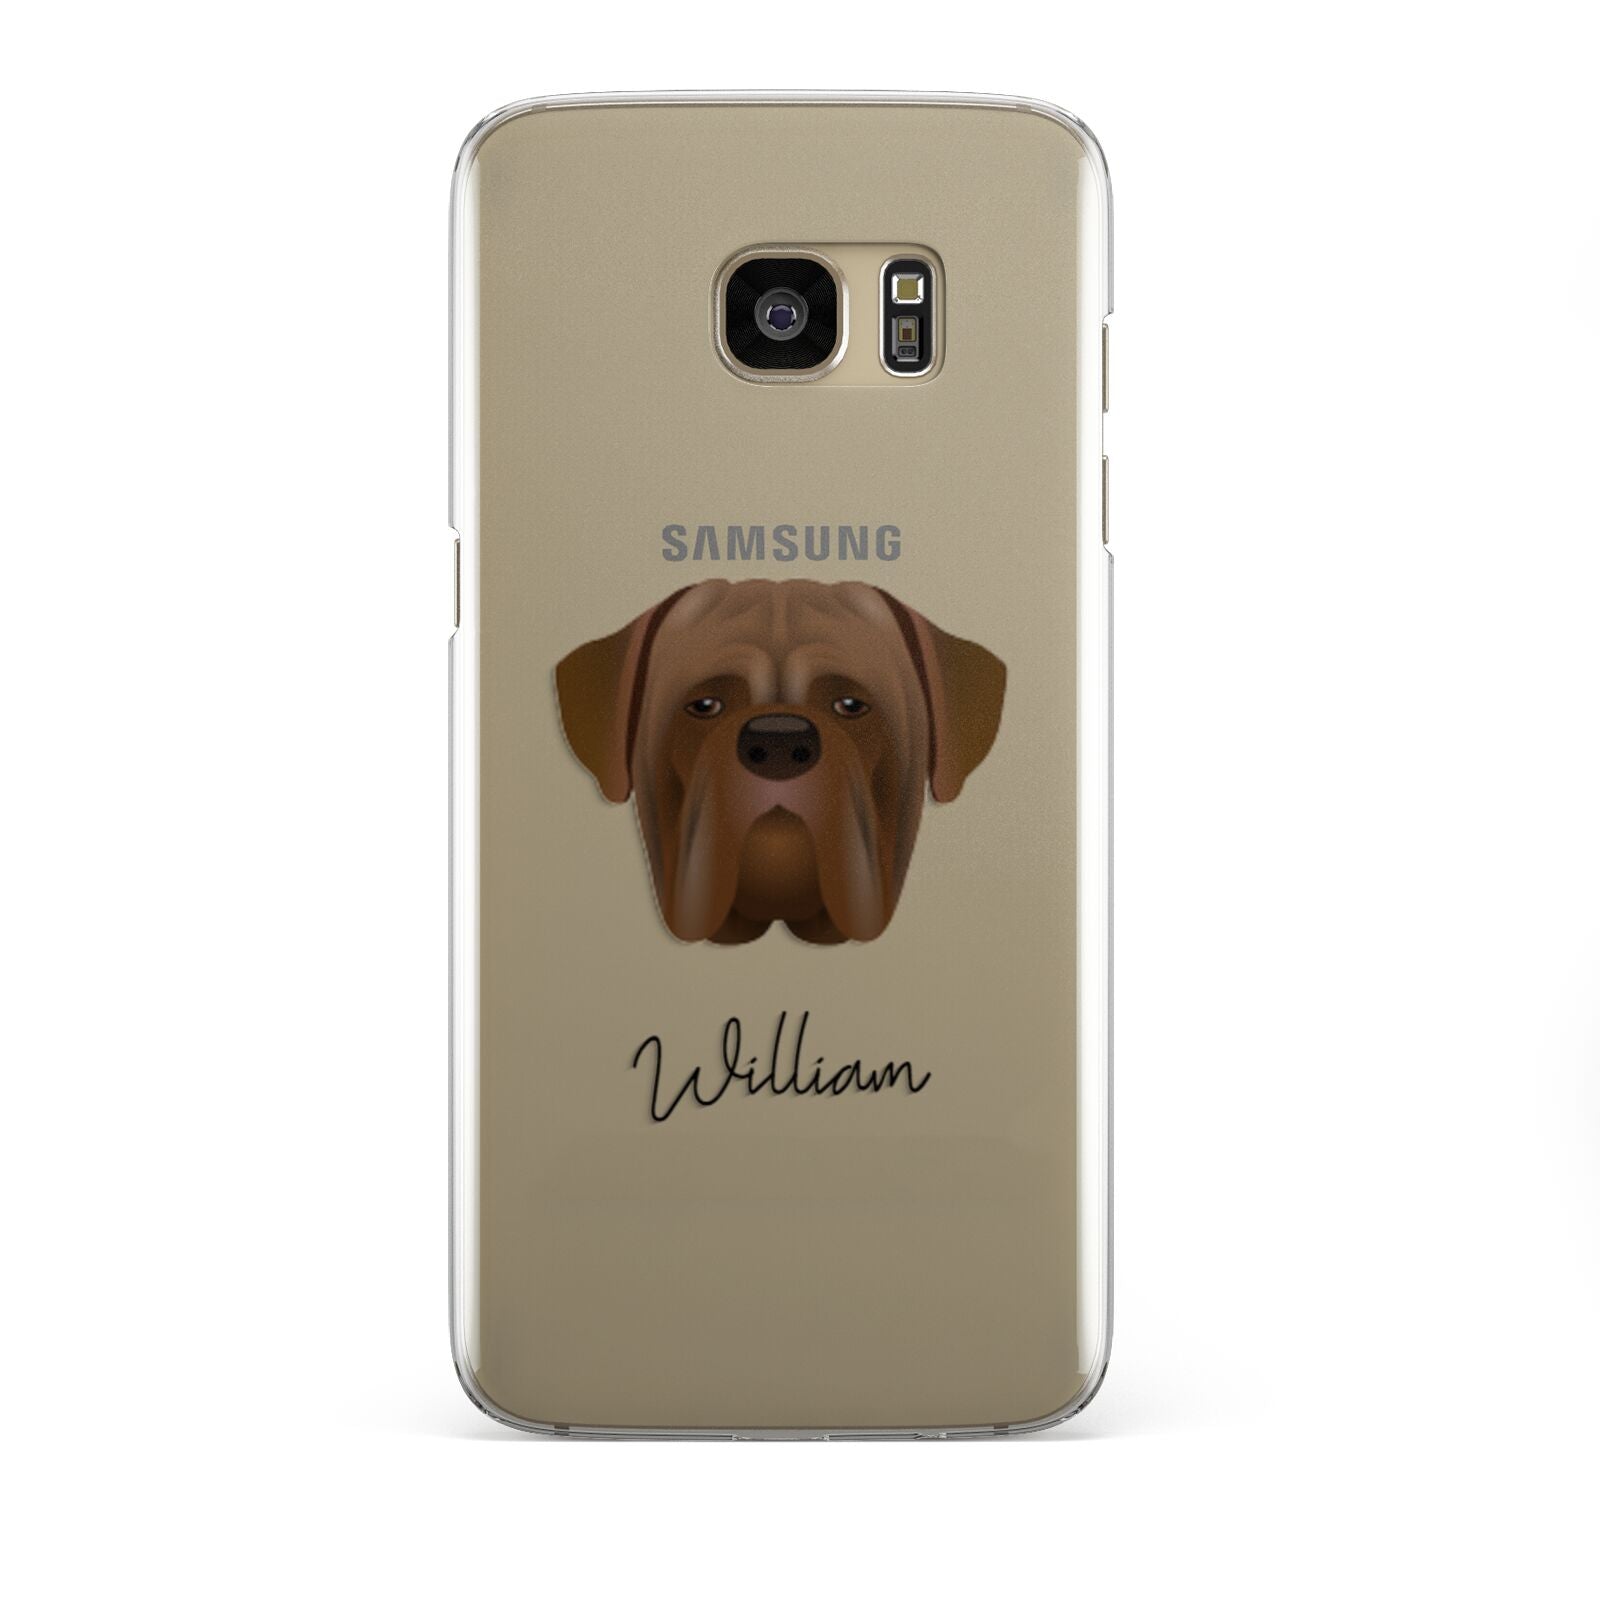 Dogue de Bordeaux Personalised Samsung Galaxy S7 Edge Case